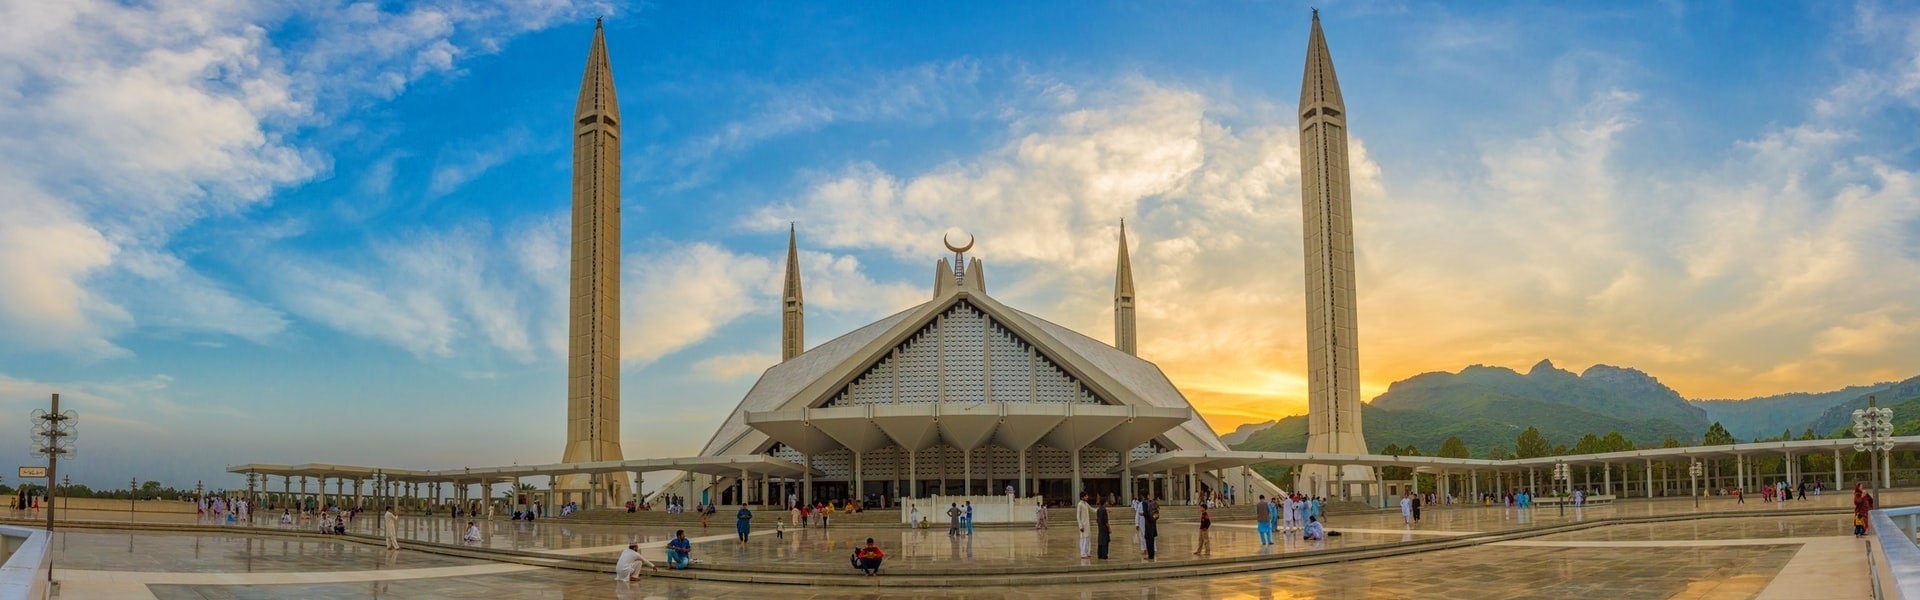 kashmir pakistan tourist attractions